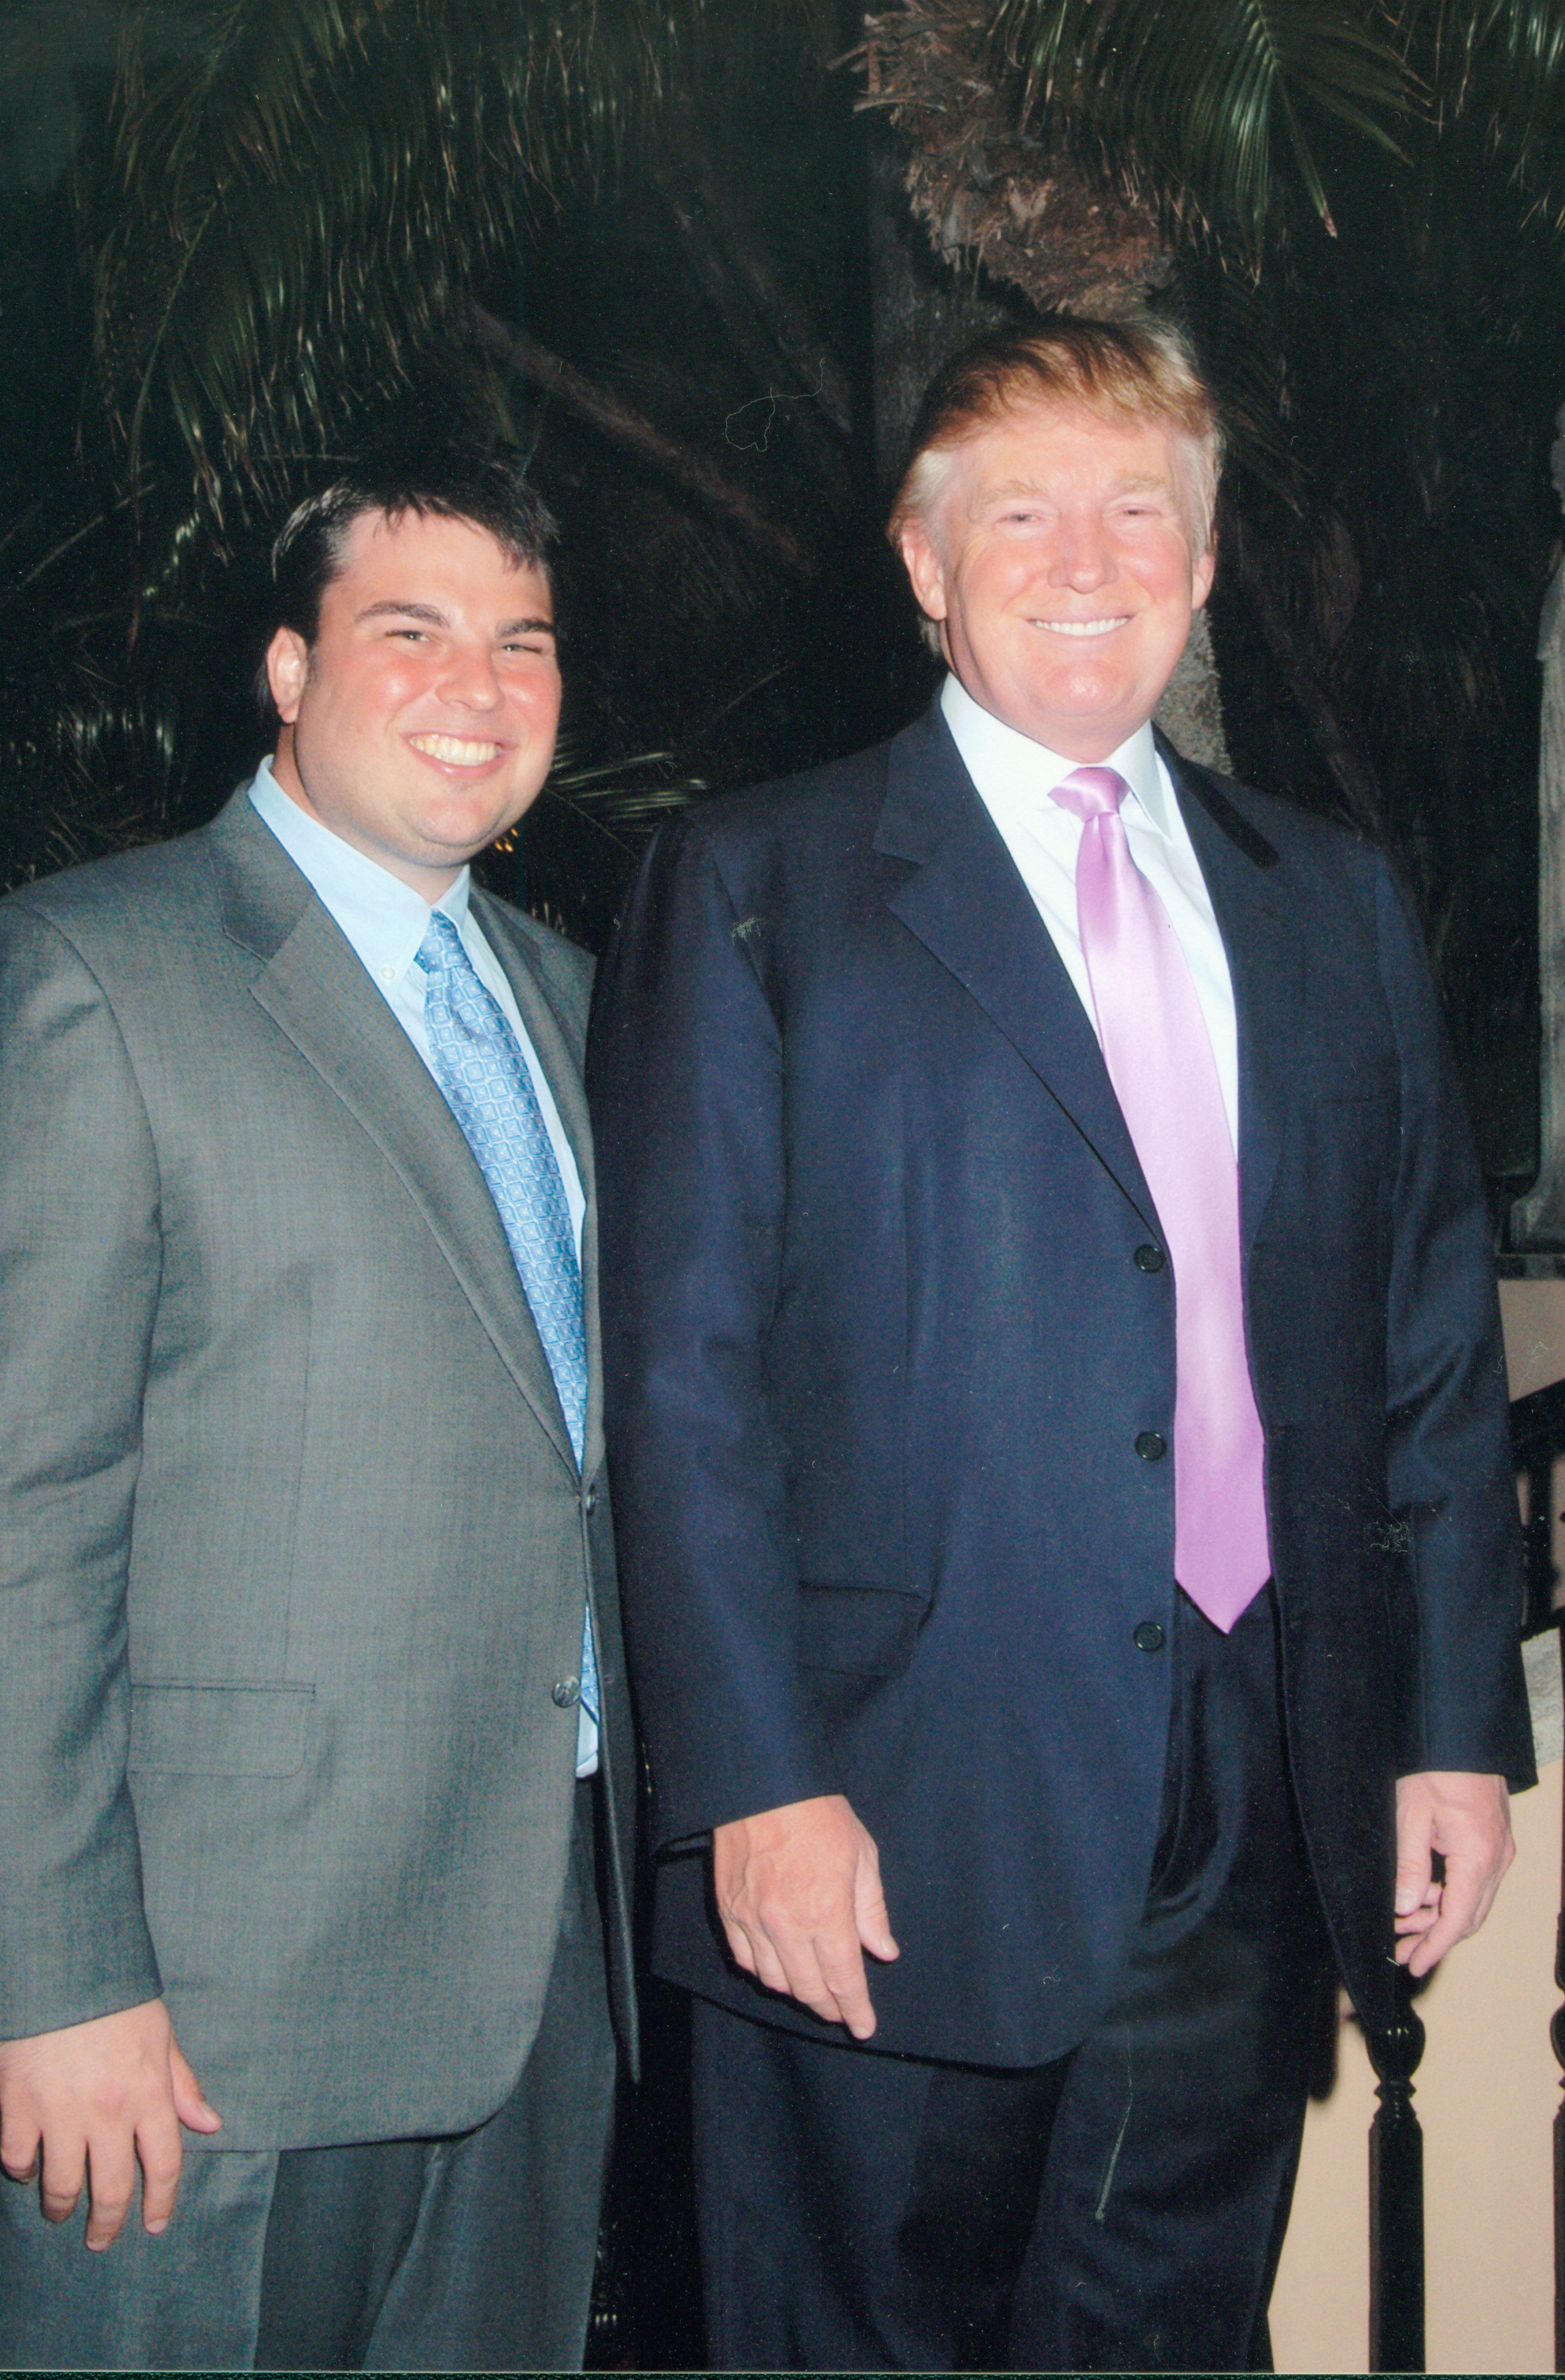 Arthur L. Bernstein and Donald J. Trump